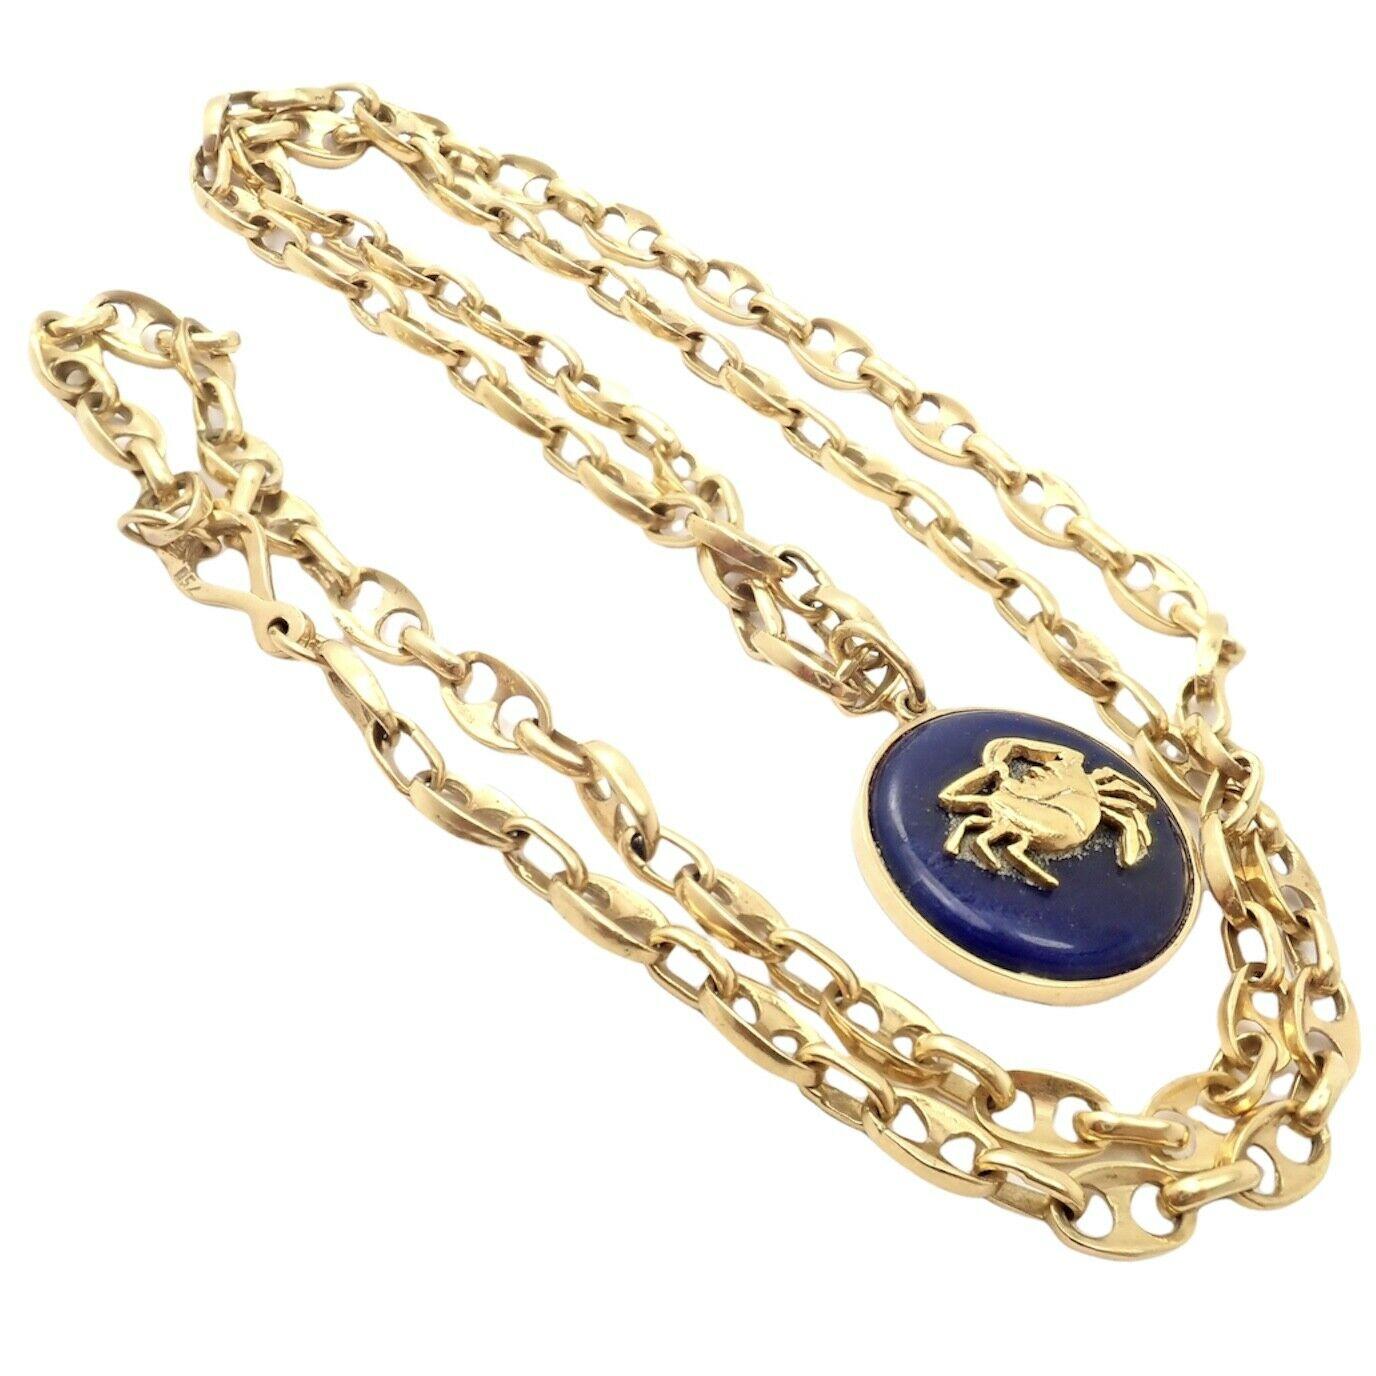 18k Yellow Gold Lapis Pendant Chain Necklace By Illias Lalaounis Greece.
With Lapis Lazuli Size: 20.5mm
Details: 
Chain Length: 27.5